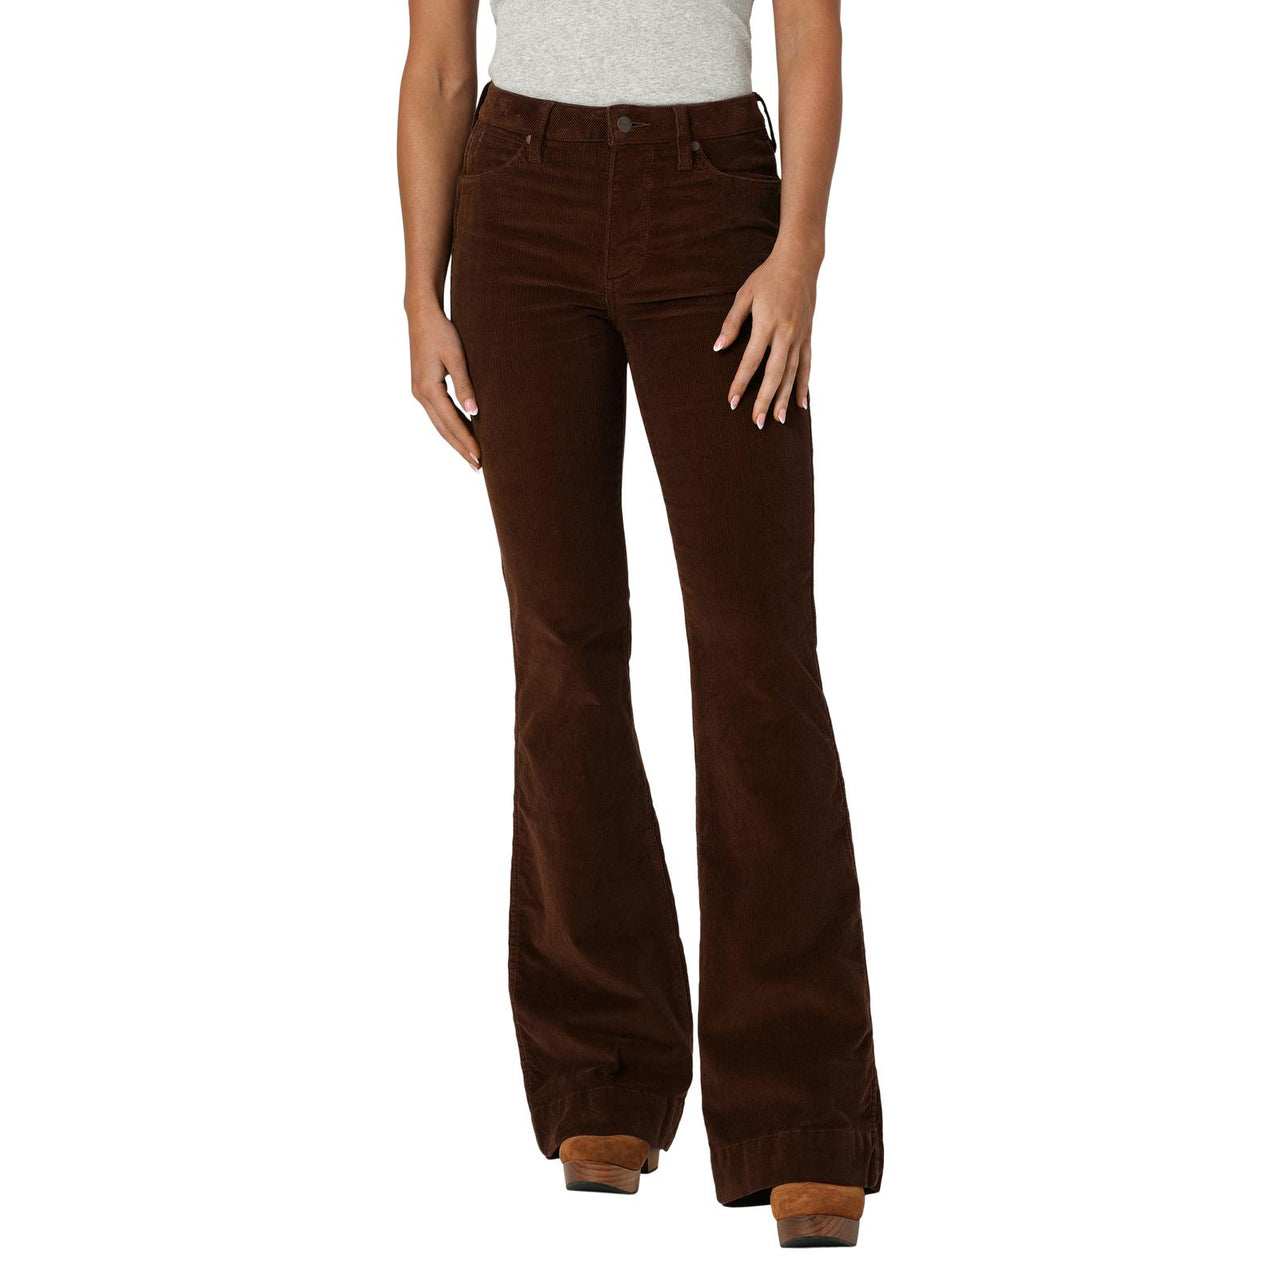 Wrangler Women's Retro Fashion Trouser Jeans - Brooke